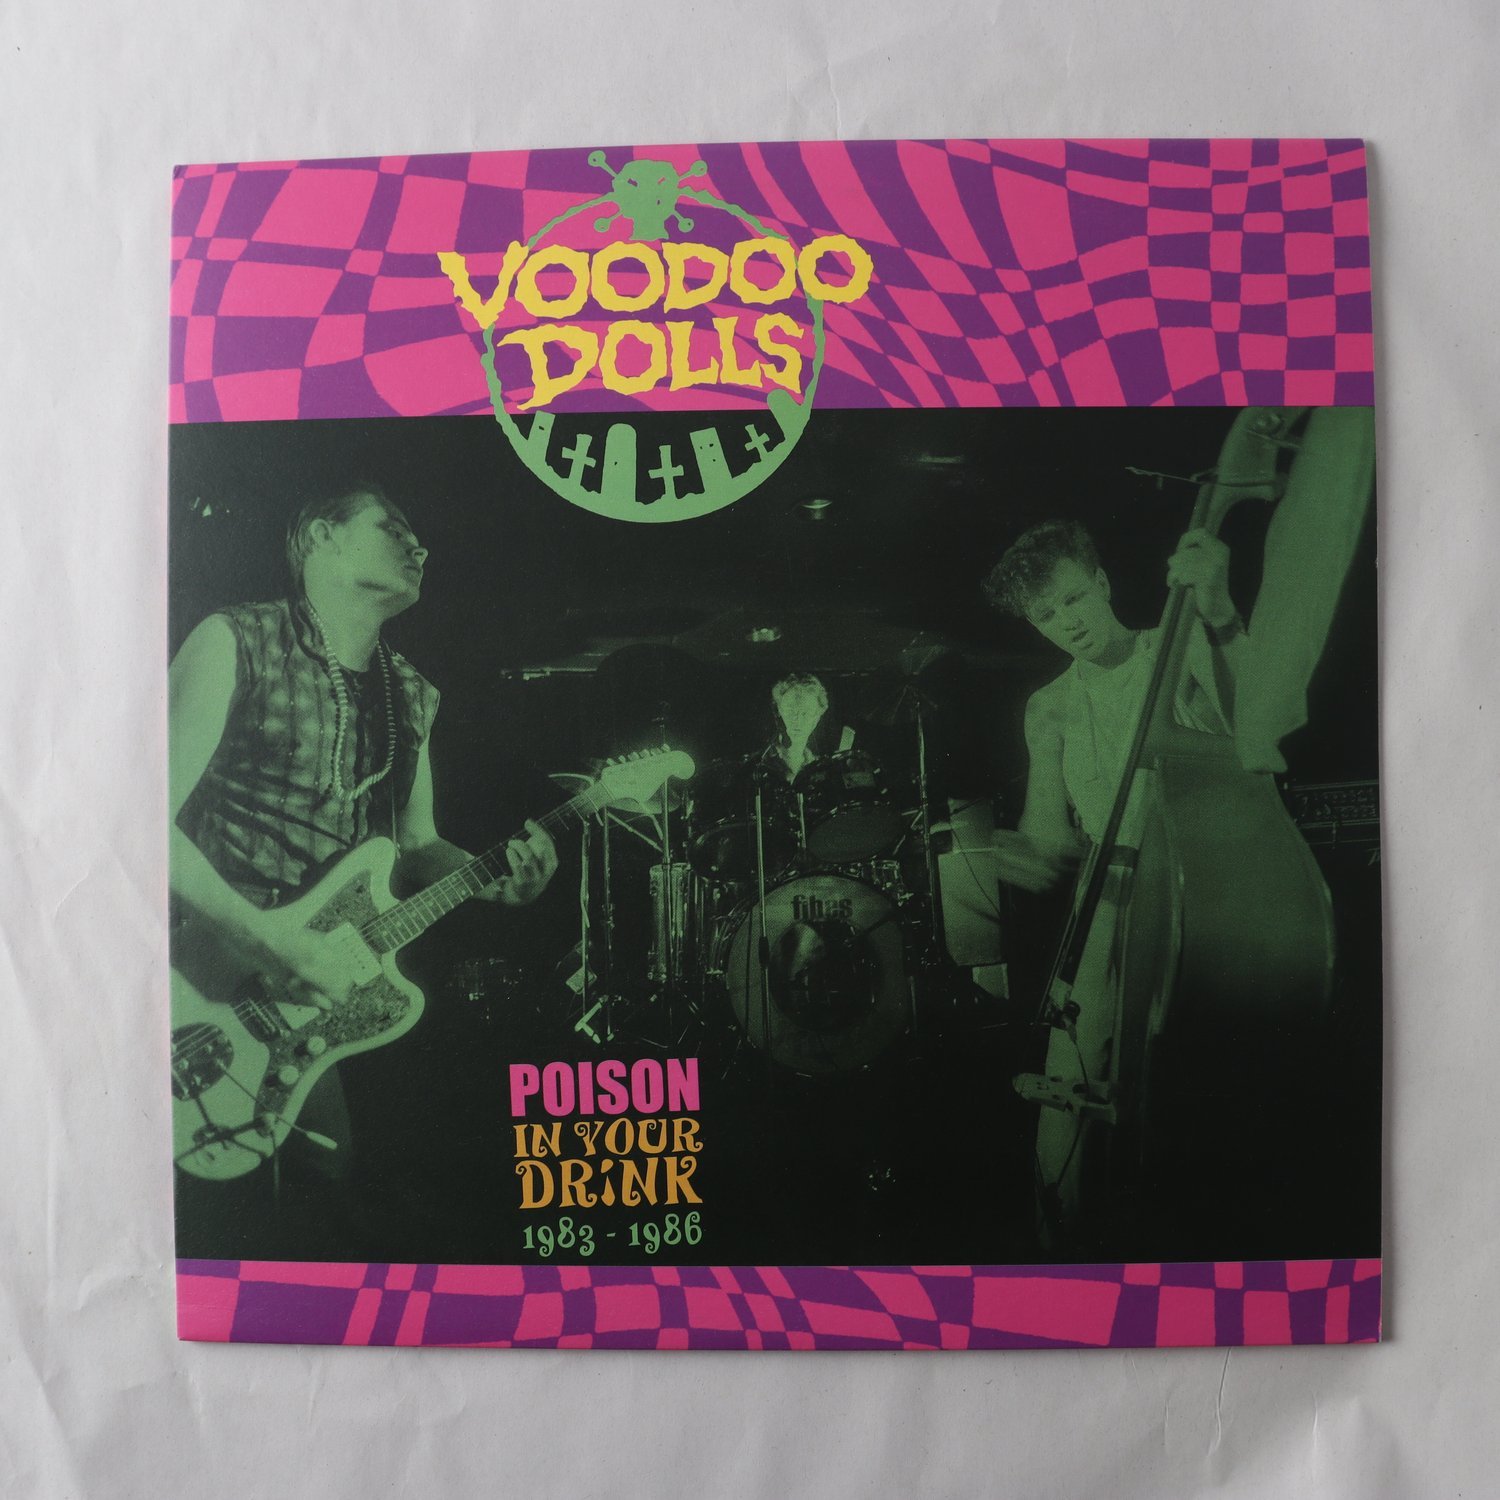 LP Voodoo Dolls, Poison In Your Drink 1983 – 1986